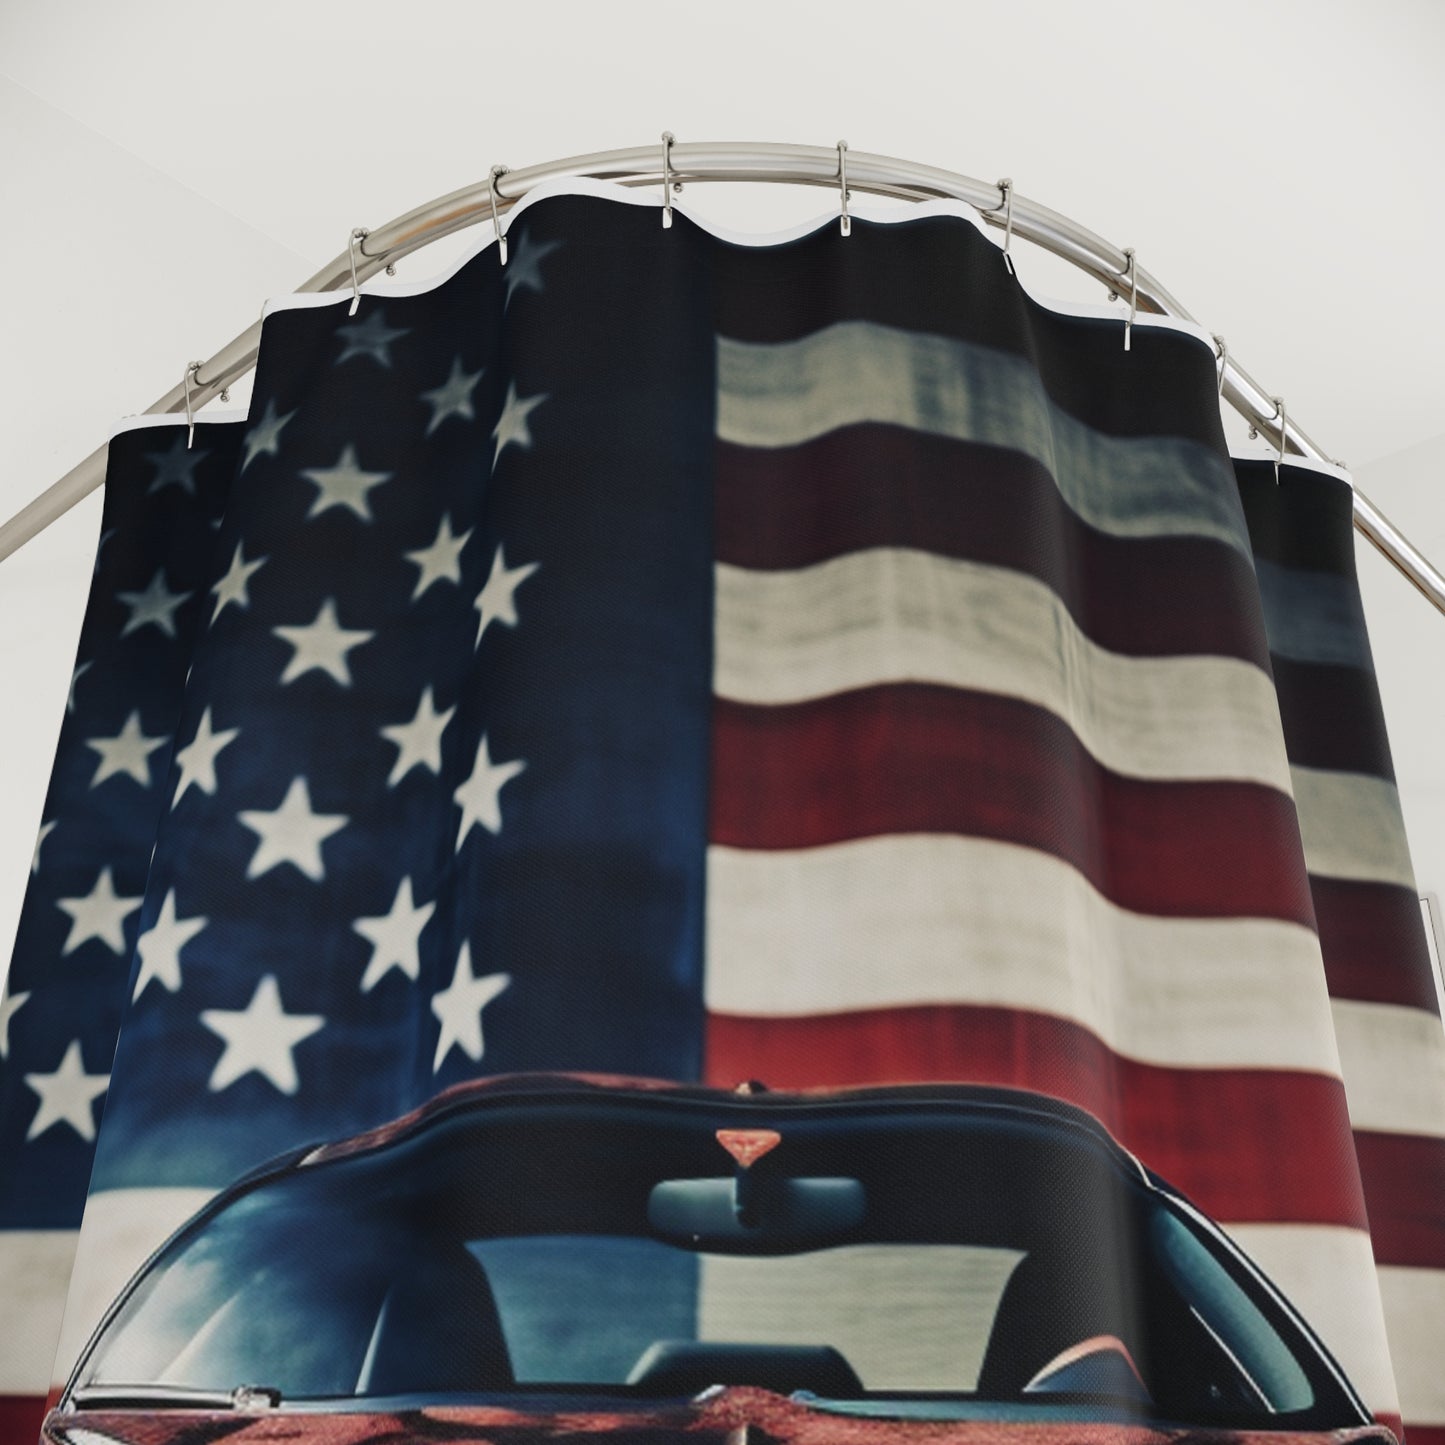 Polyester Shower Curtain Bugatti Flag 3